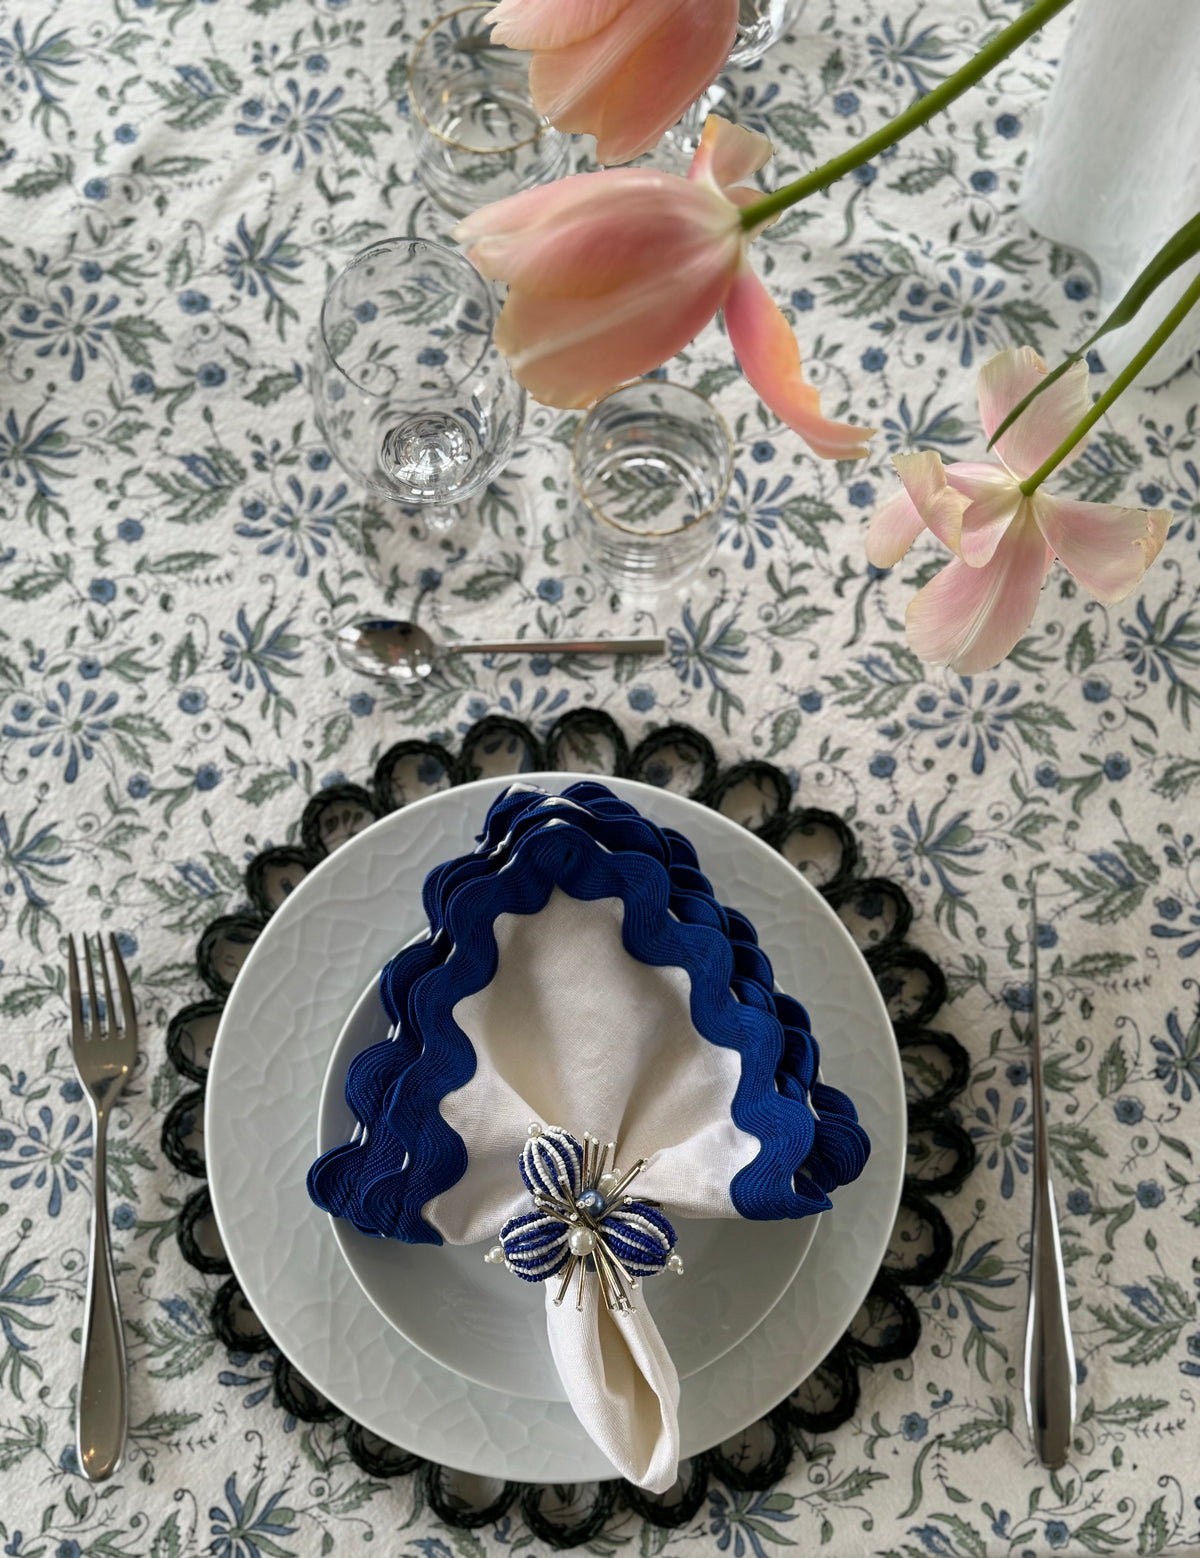 Von Home's Block Print Tablecloth - Blue flowers